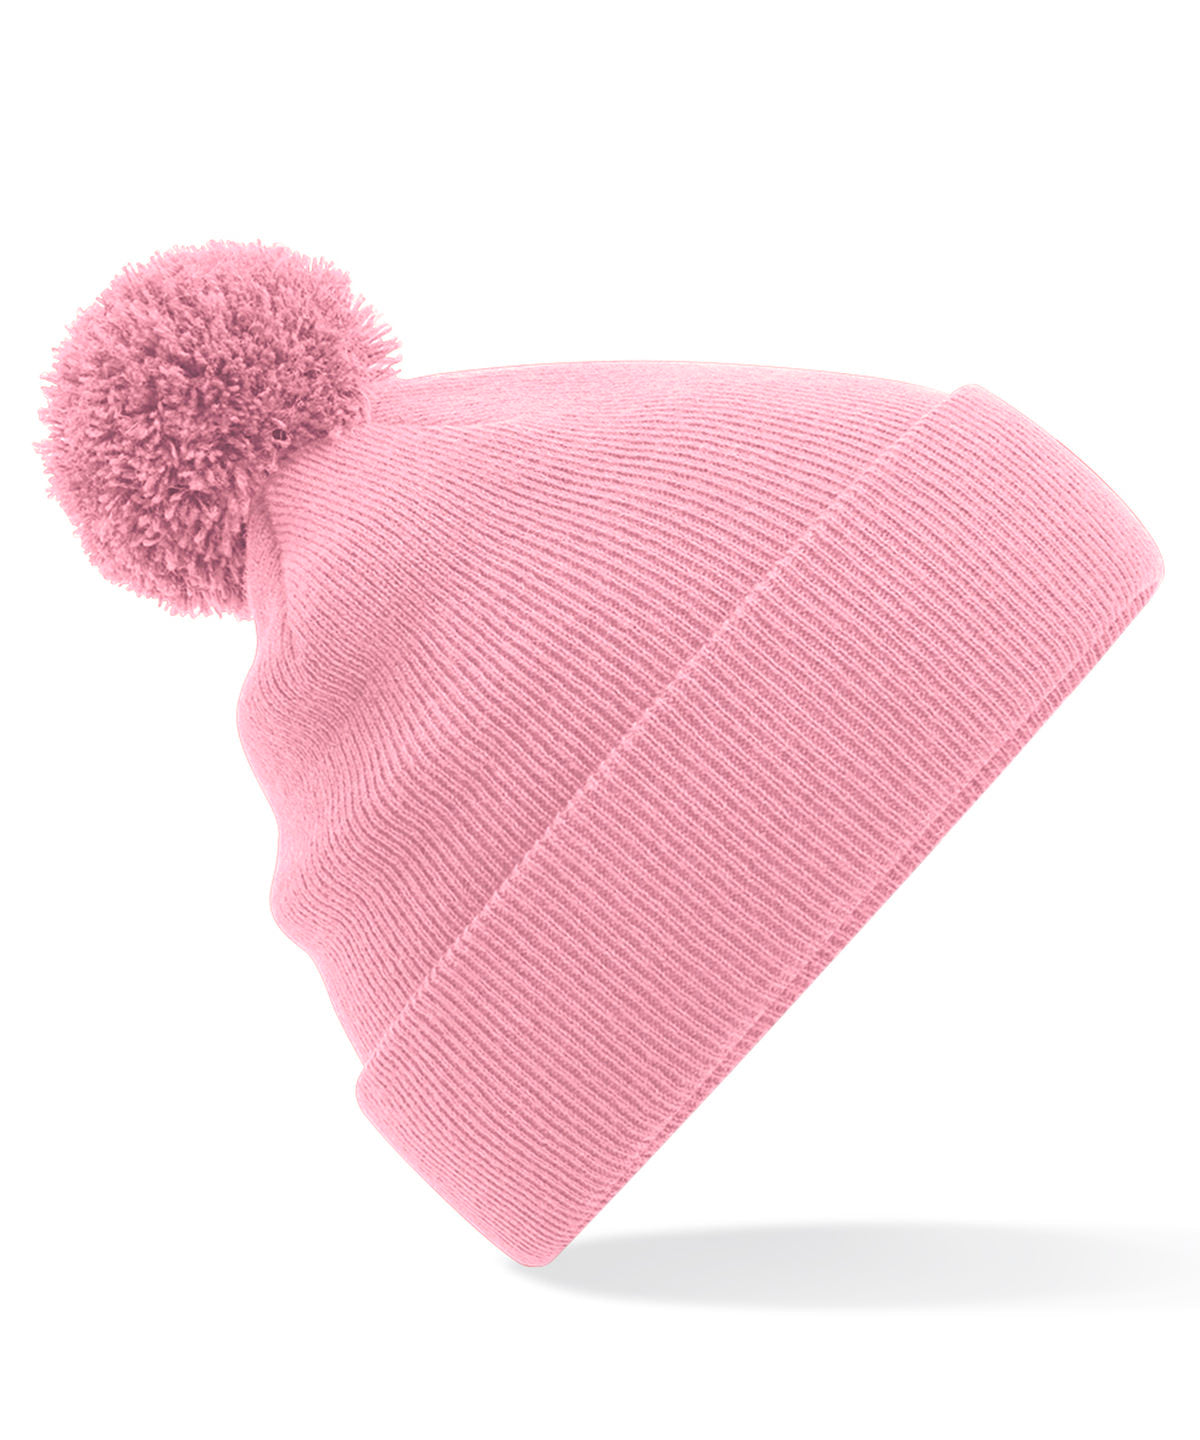 Personalised Hats - Light Pink Beechfield Junior original pom pom beanie